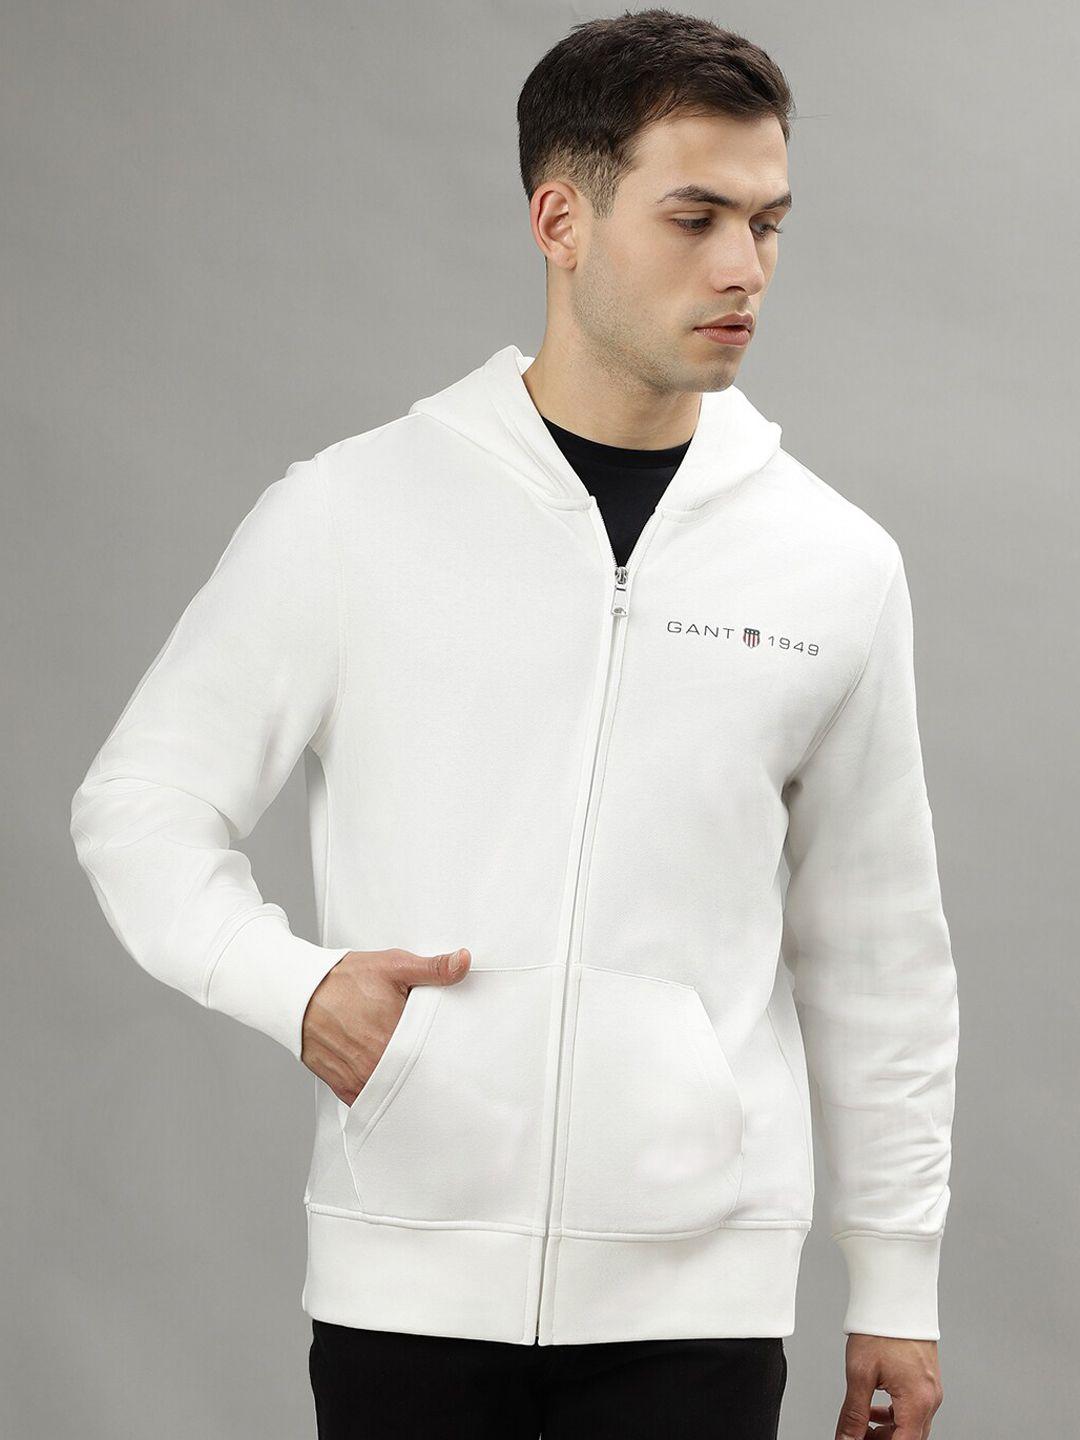 gant-hooded-long-sleeves-tailored-jacket